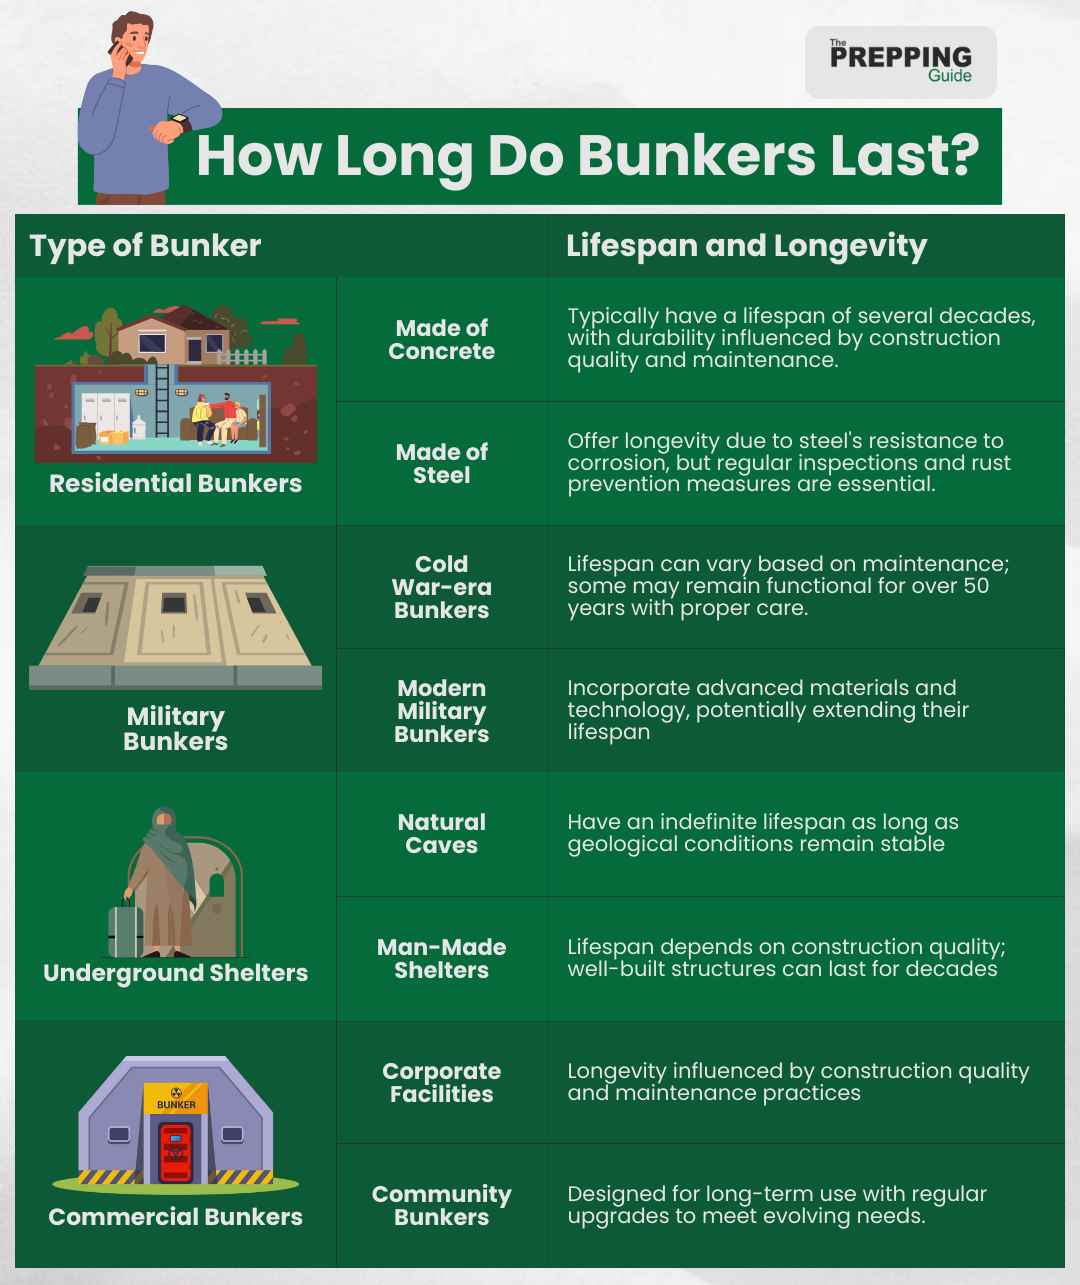 Lifespan and longevity of bunkers.